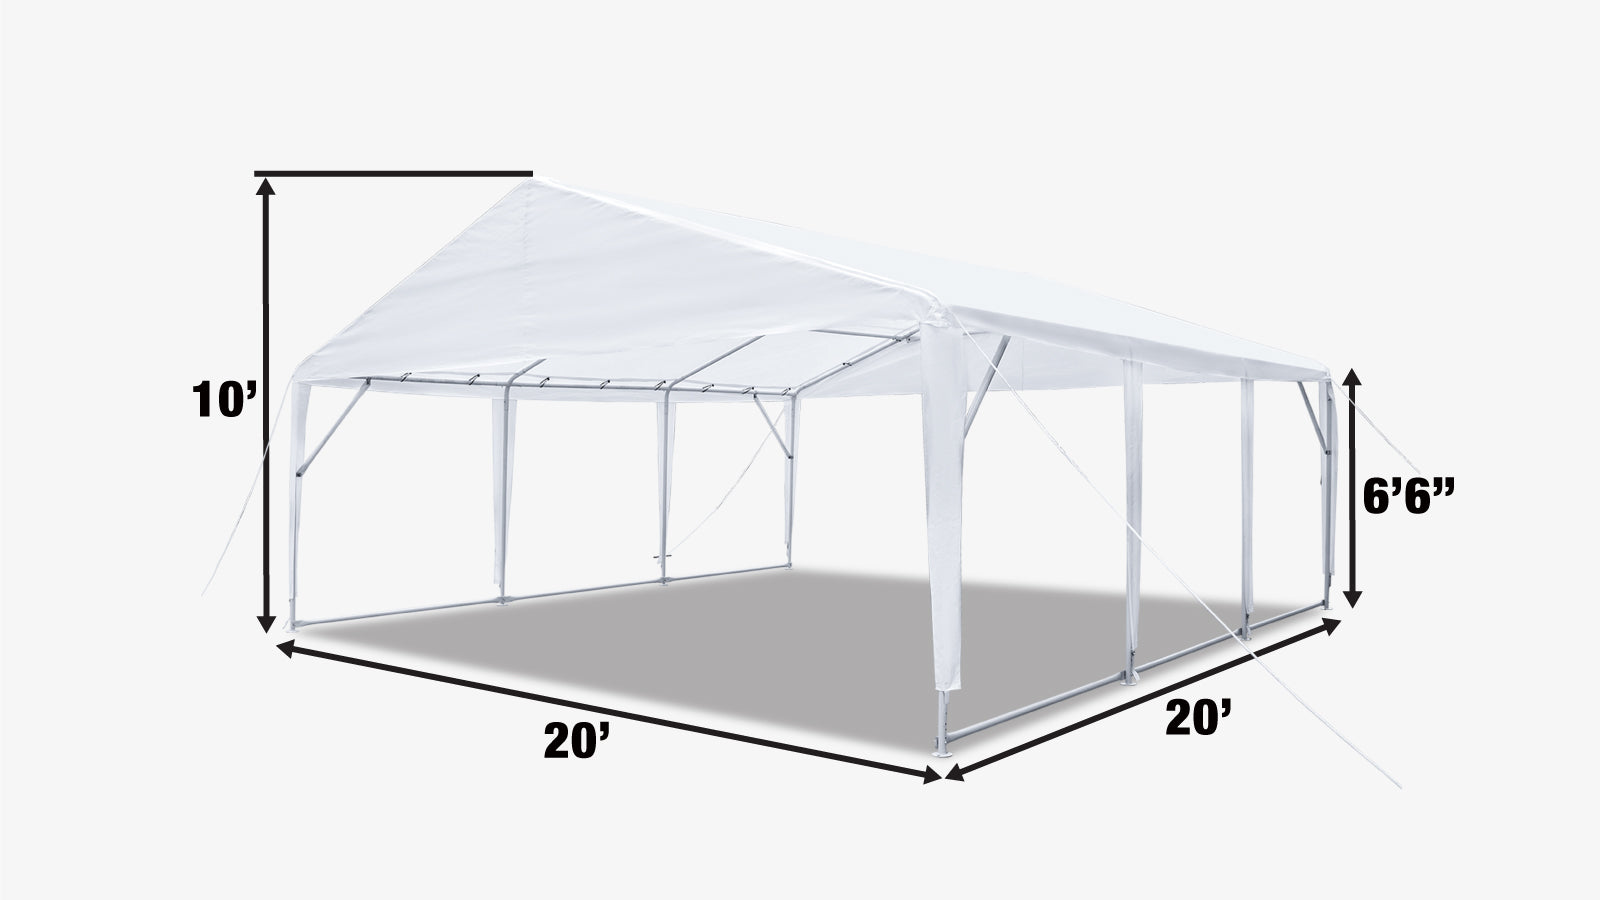 TMG Industrial 20’ x 20’ Heavy Duty Outdoor Party Tent, PE Tarpaulin Fabric, 6’6” Overhead, 10’ Peak Ceiling, TMG-PT2020A-specifications-image